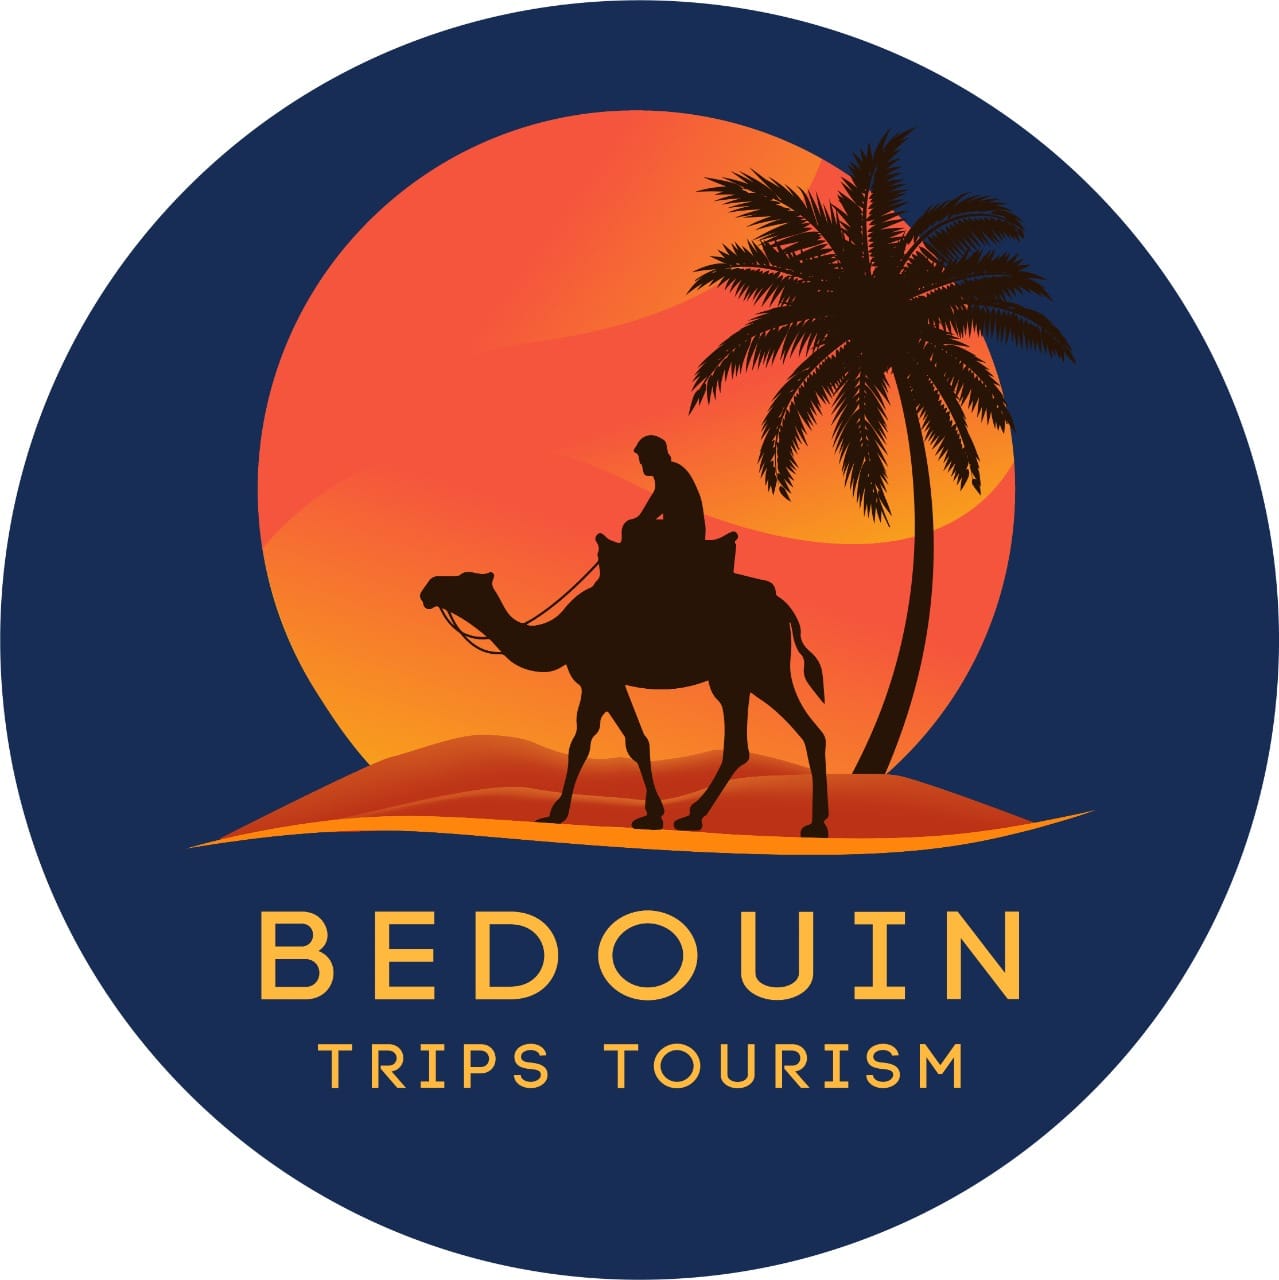 Bedouin Trips Tourism